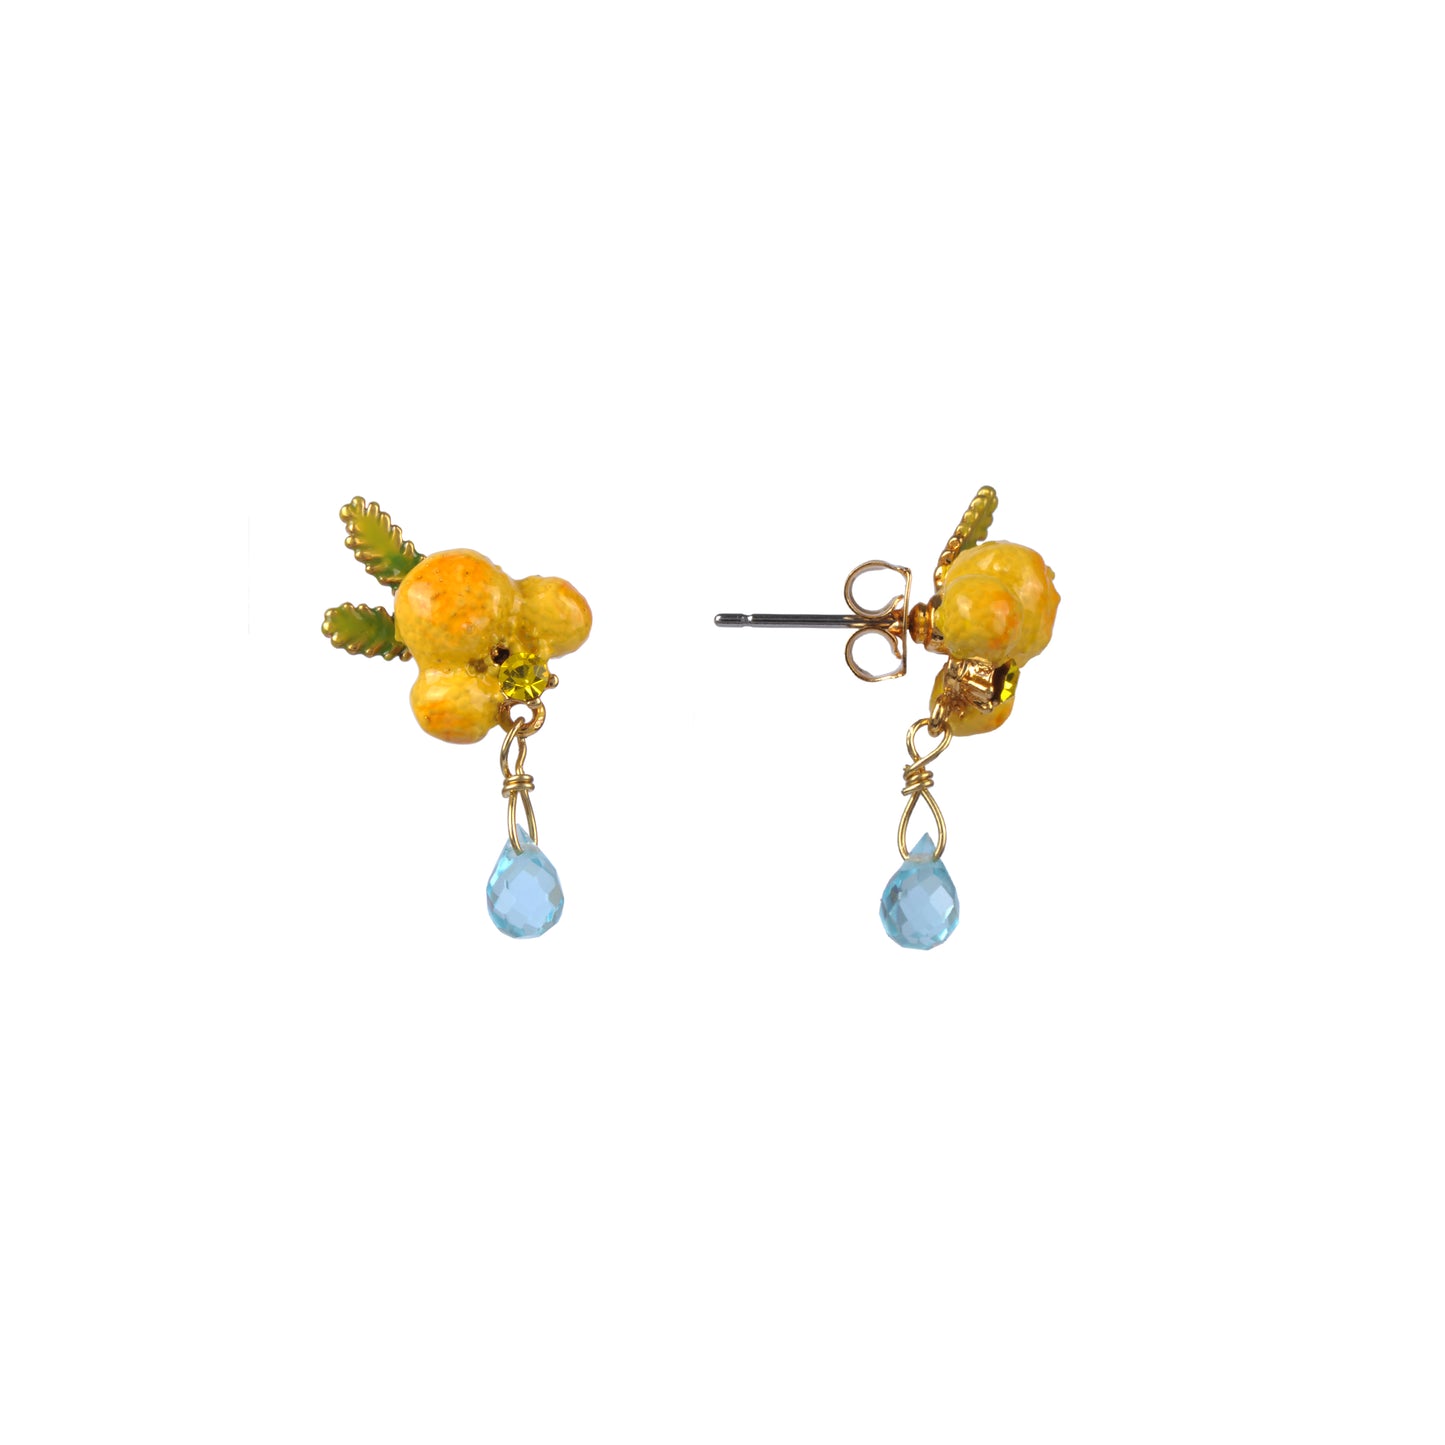 Mimosa Flower And Leaf Earrings | ABJP103T/1